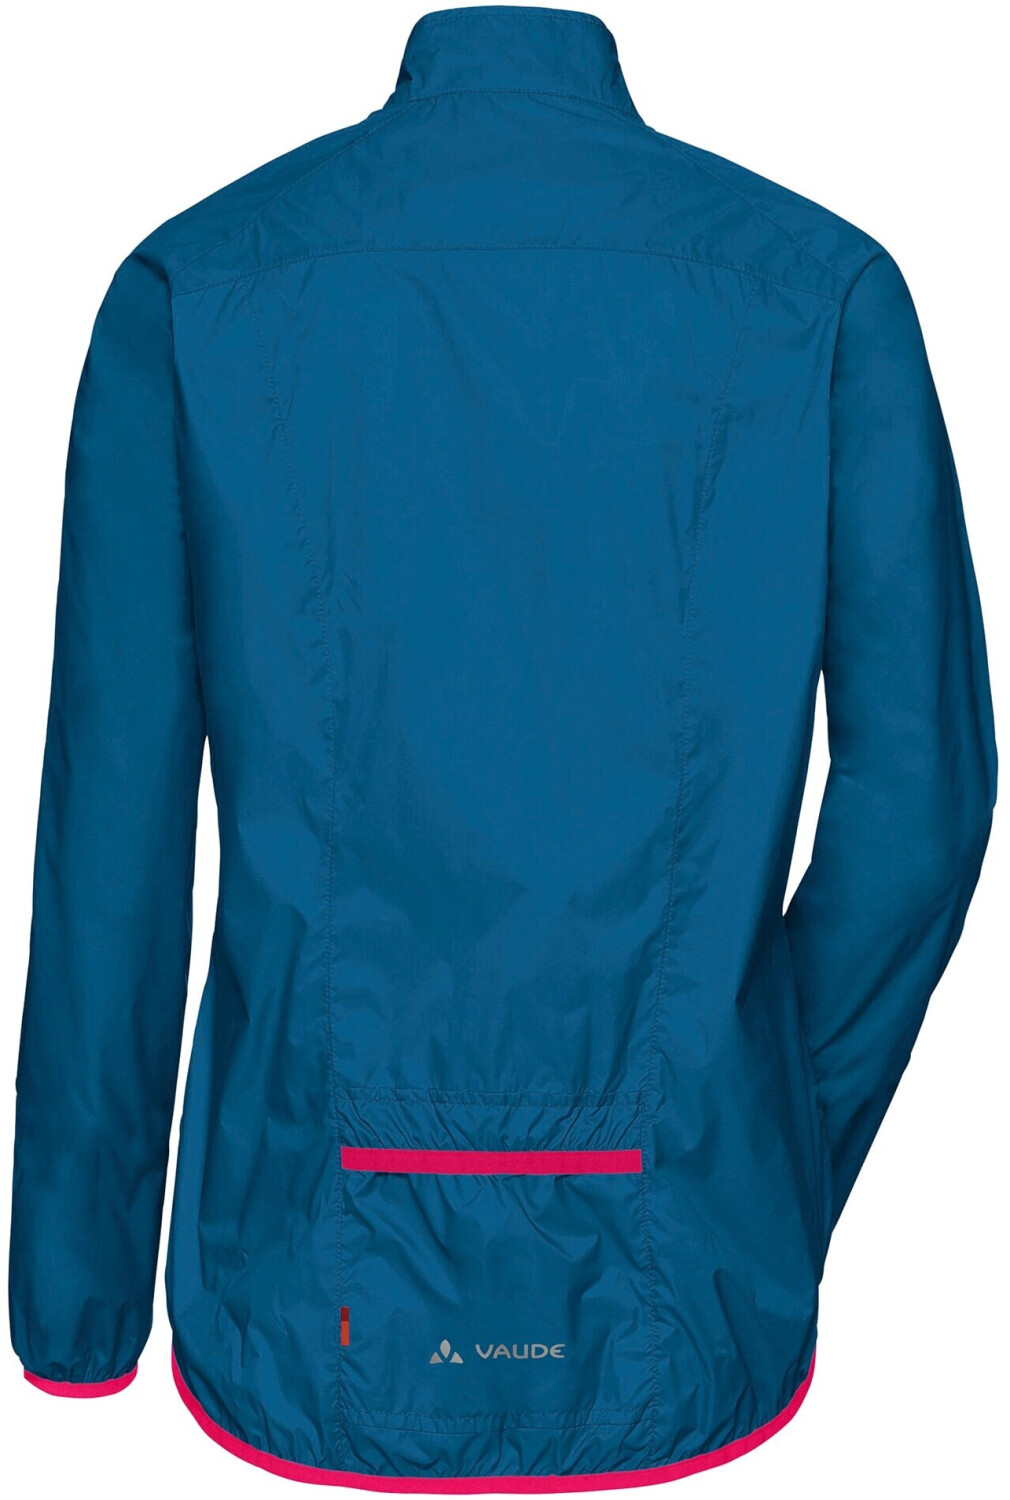 kingfisher/pink | VAUDE Air 59,95 ab € bei III Preisvergleich Women\'s Jacket